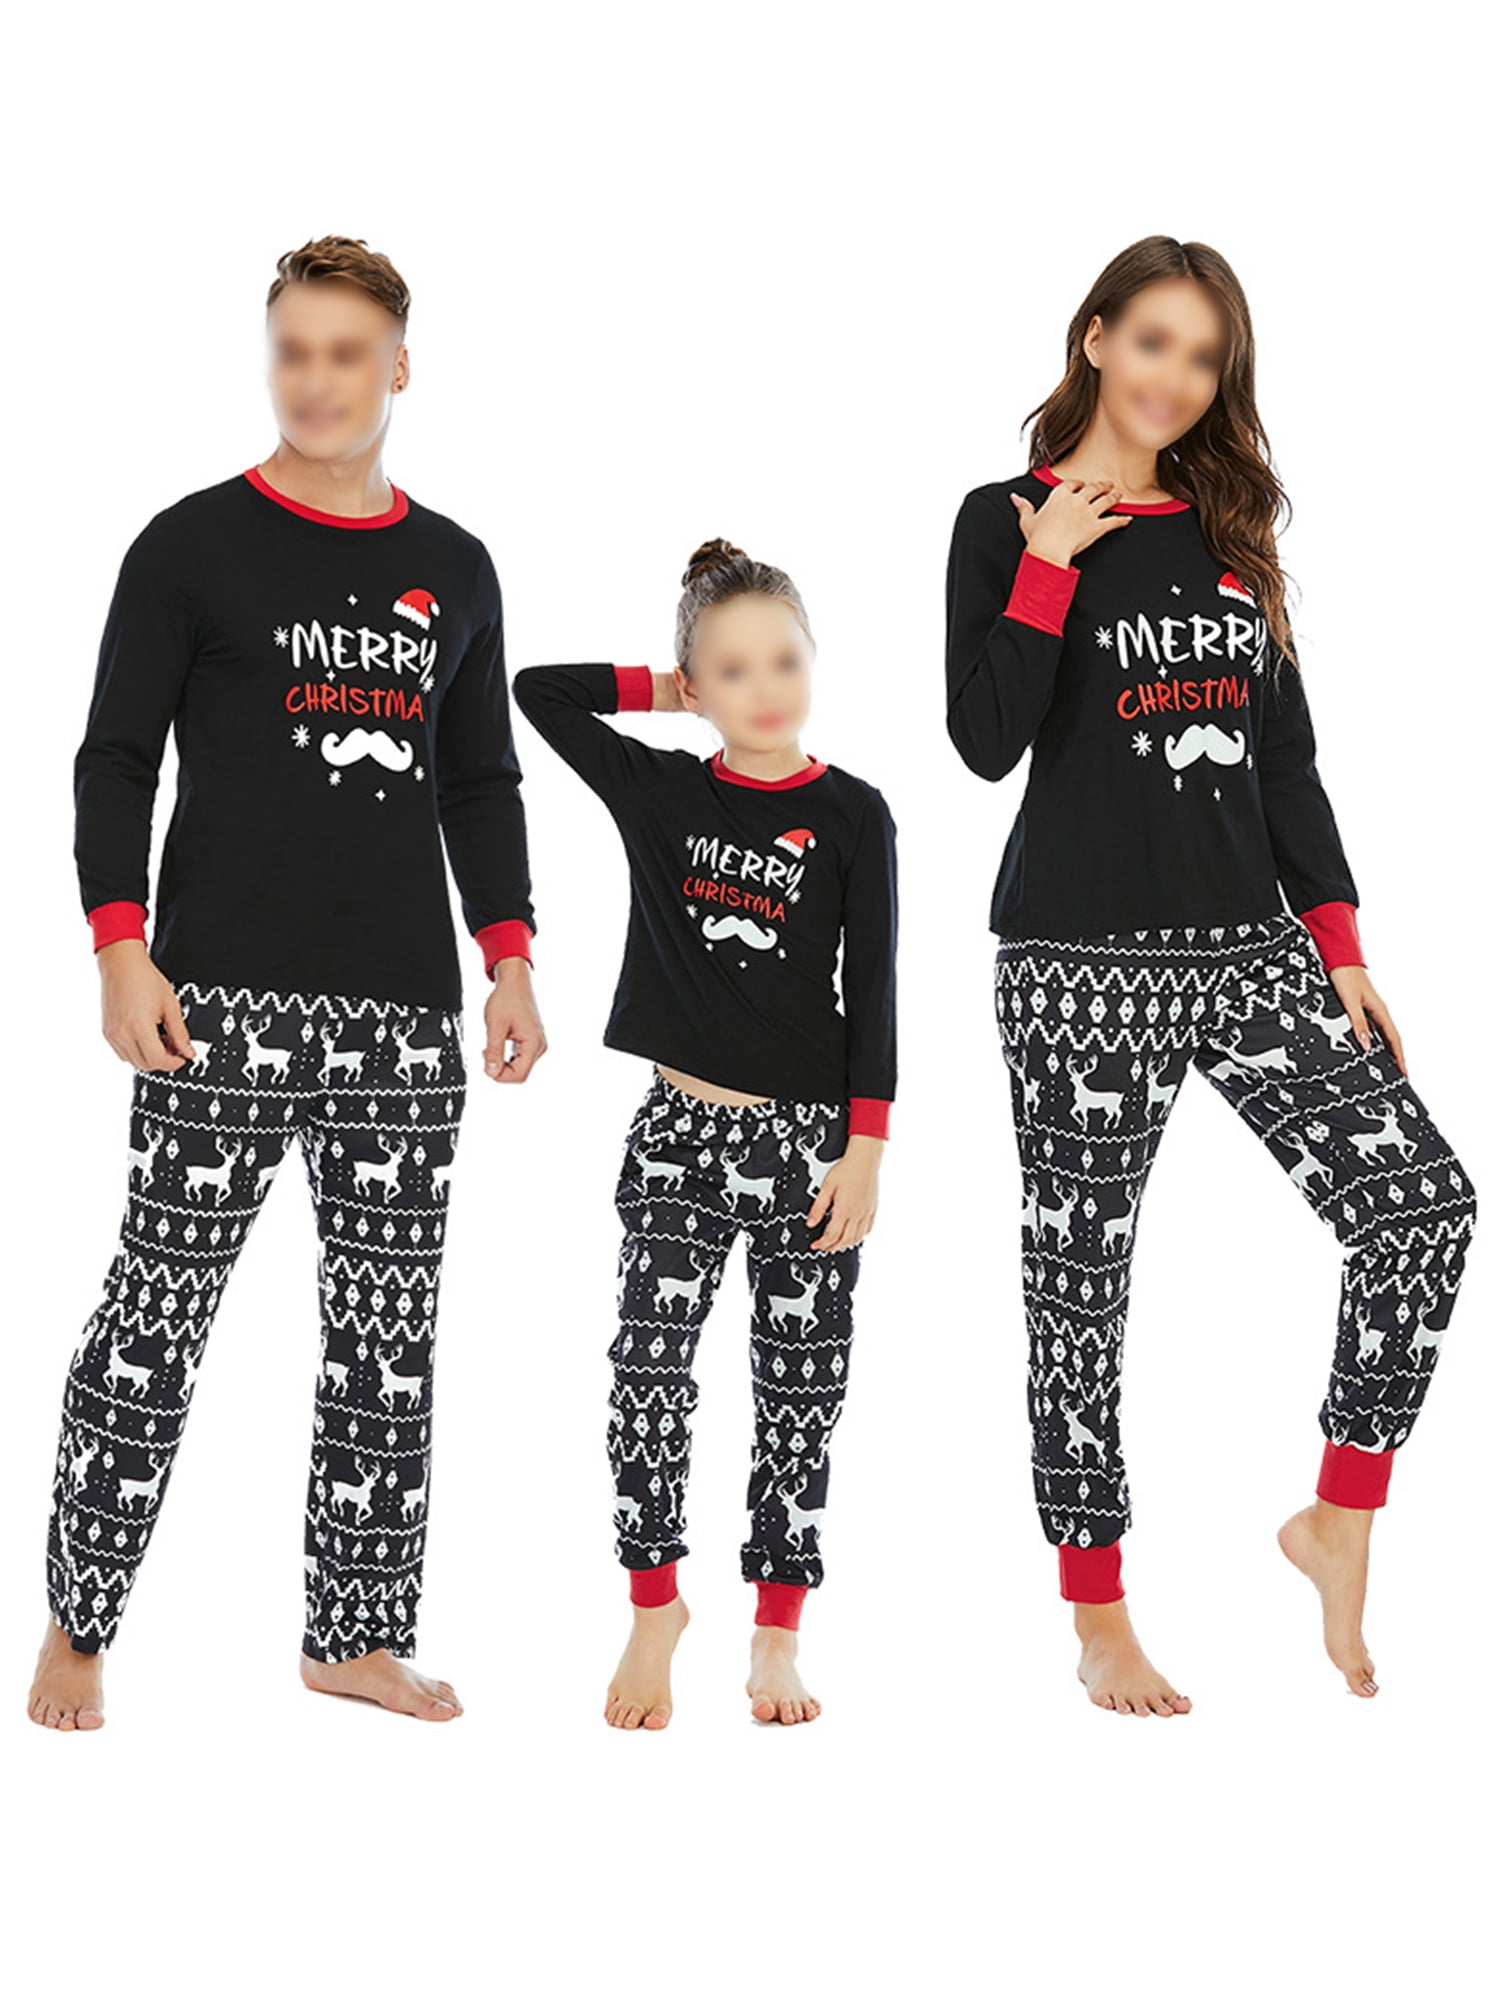 Aibrou Matching Christmas Pyjamas for Family Merry Xmas Printed Long Sleeve Long Pants Pajamas Set Sleepwear Outfits for Dad Mom Kids